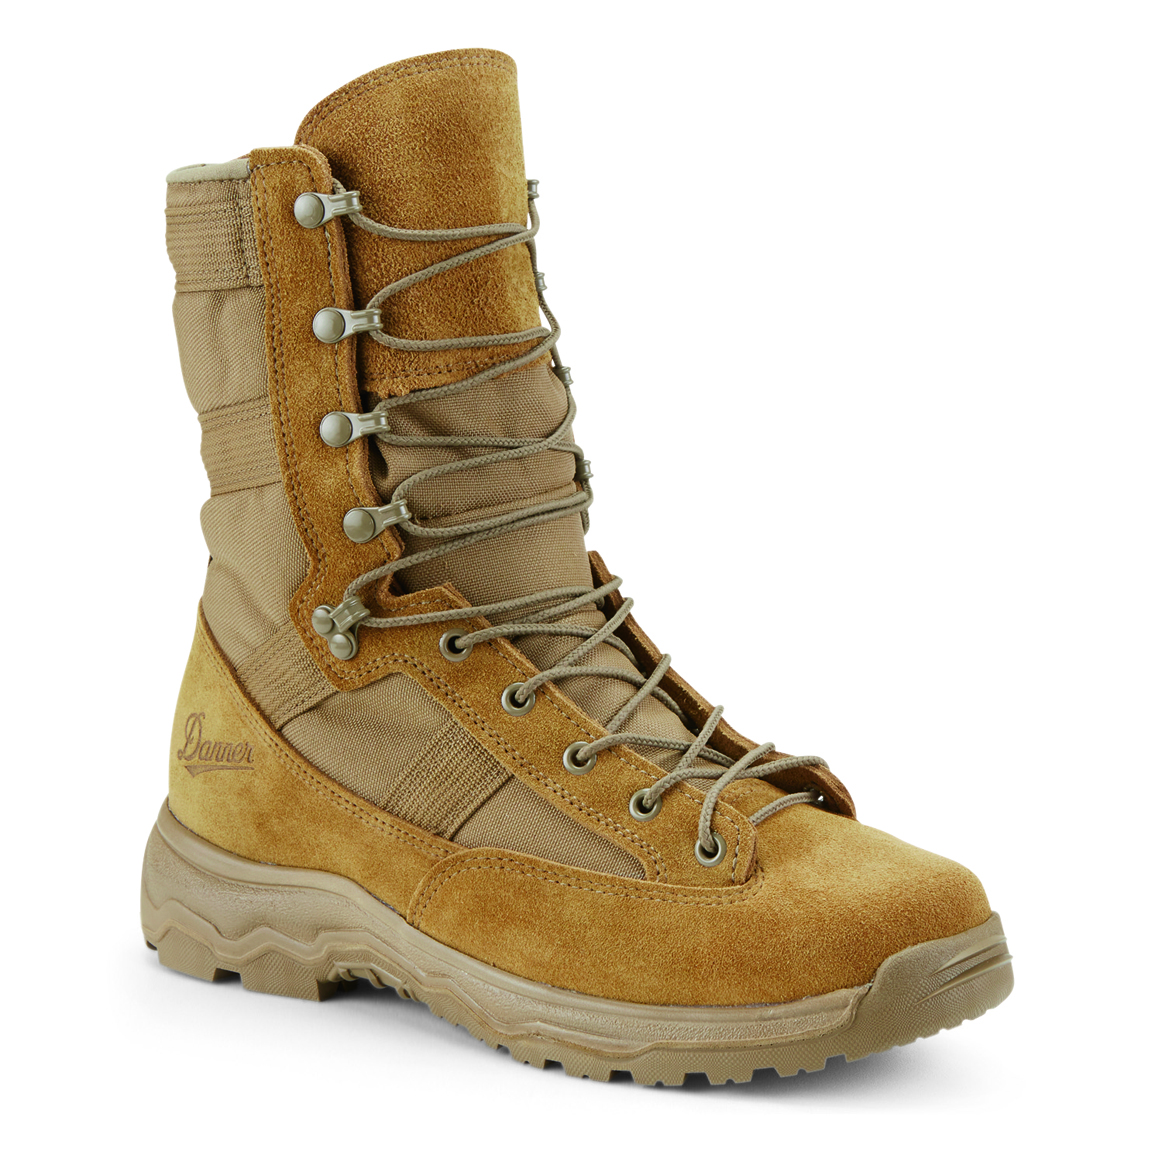 Danner Men's Reckoning 8" Hot Weather Tactical Boots, Coyote